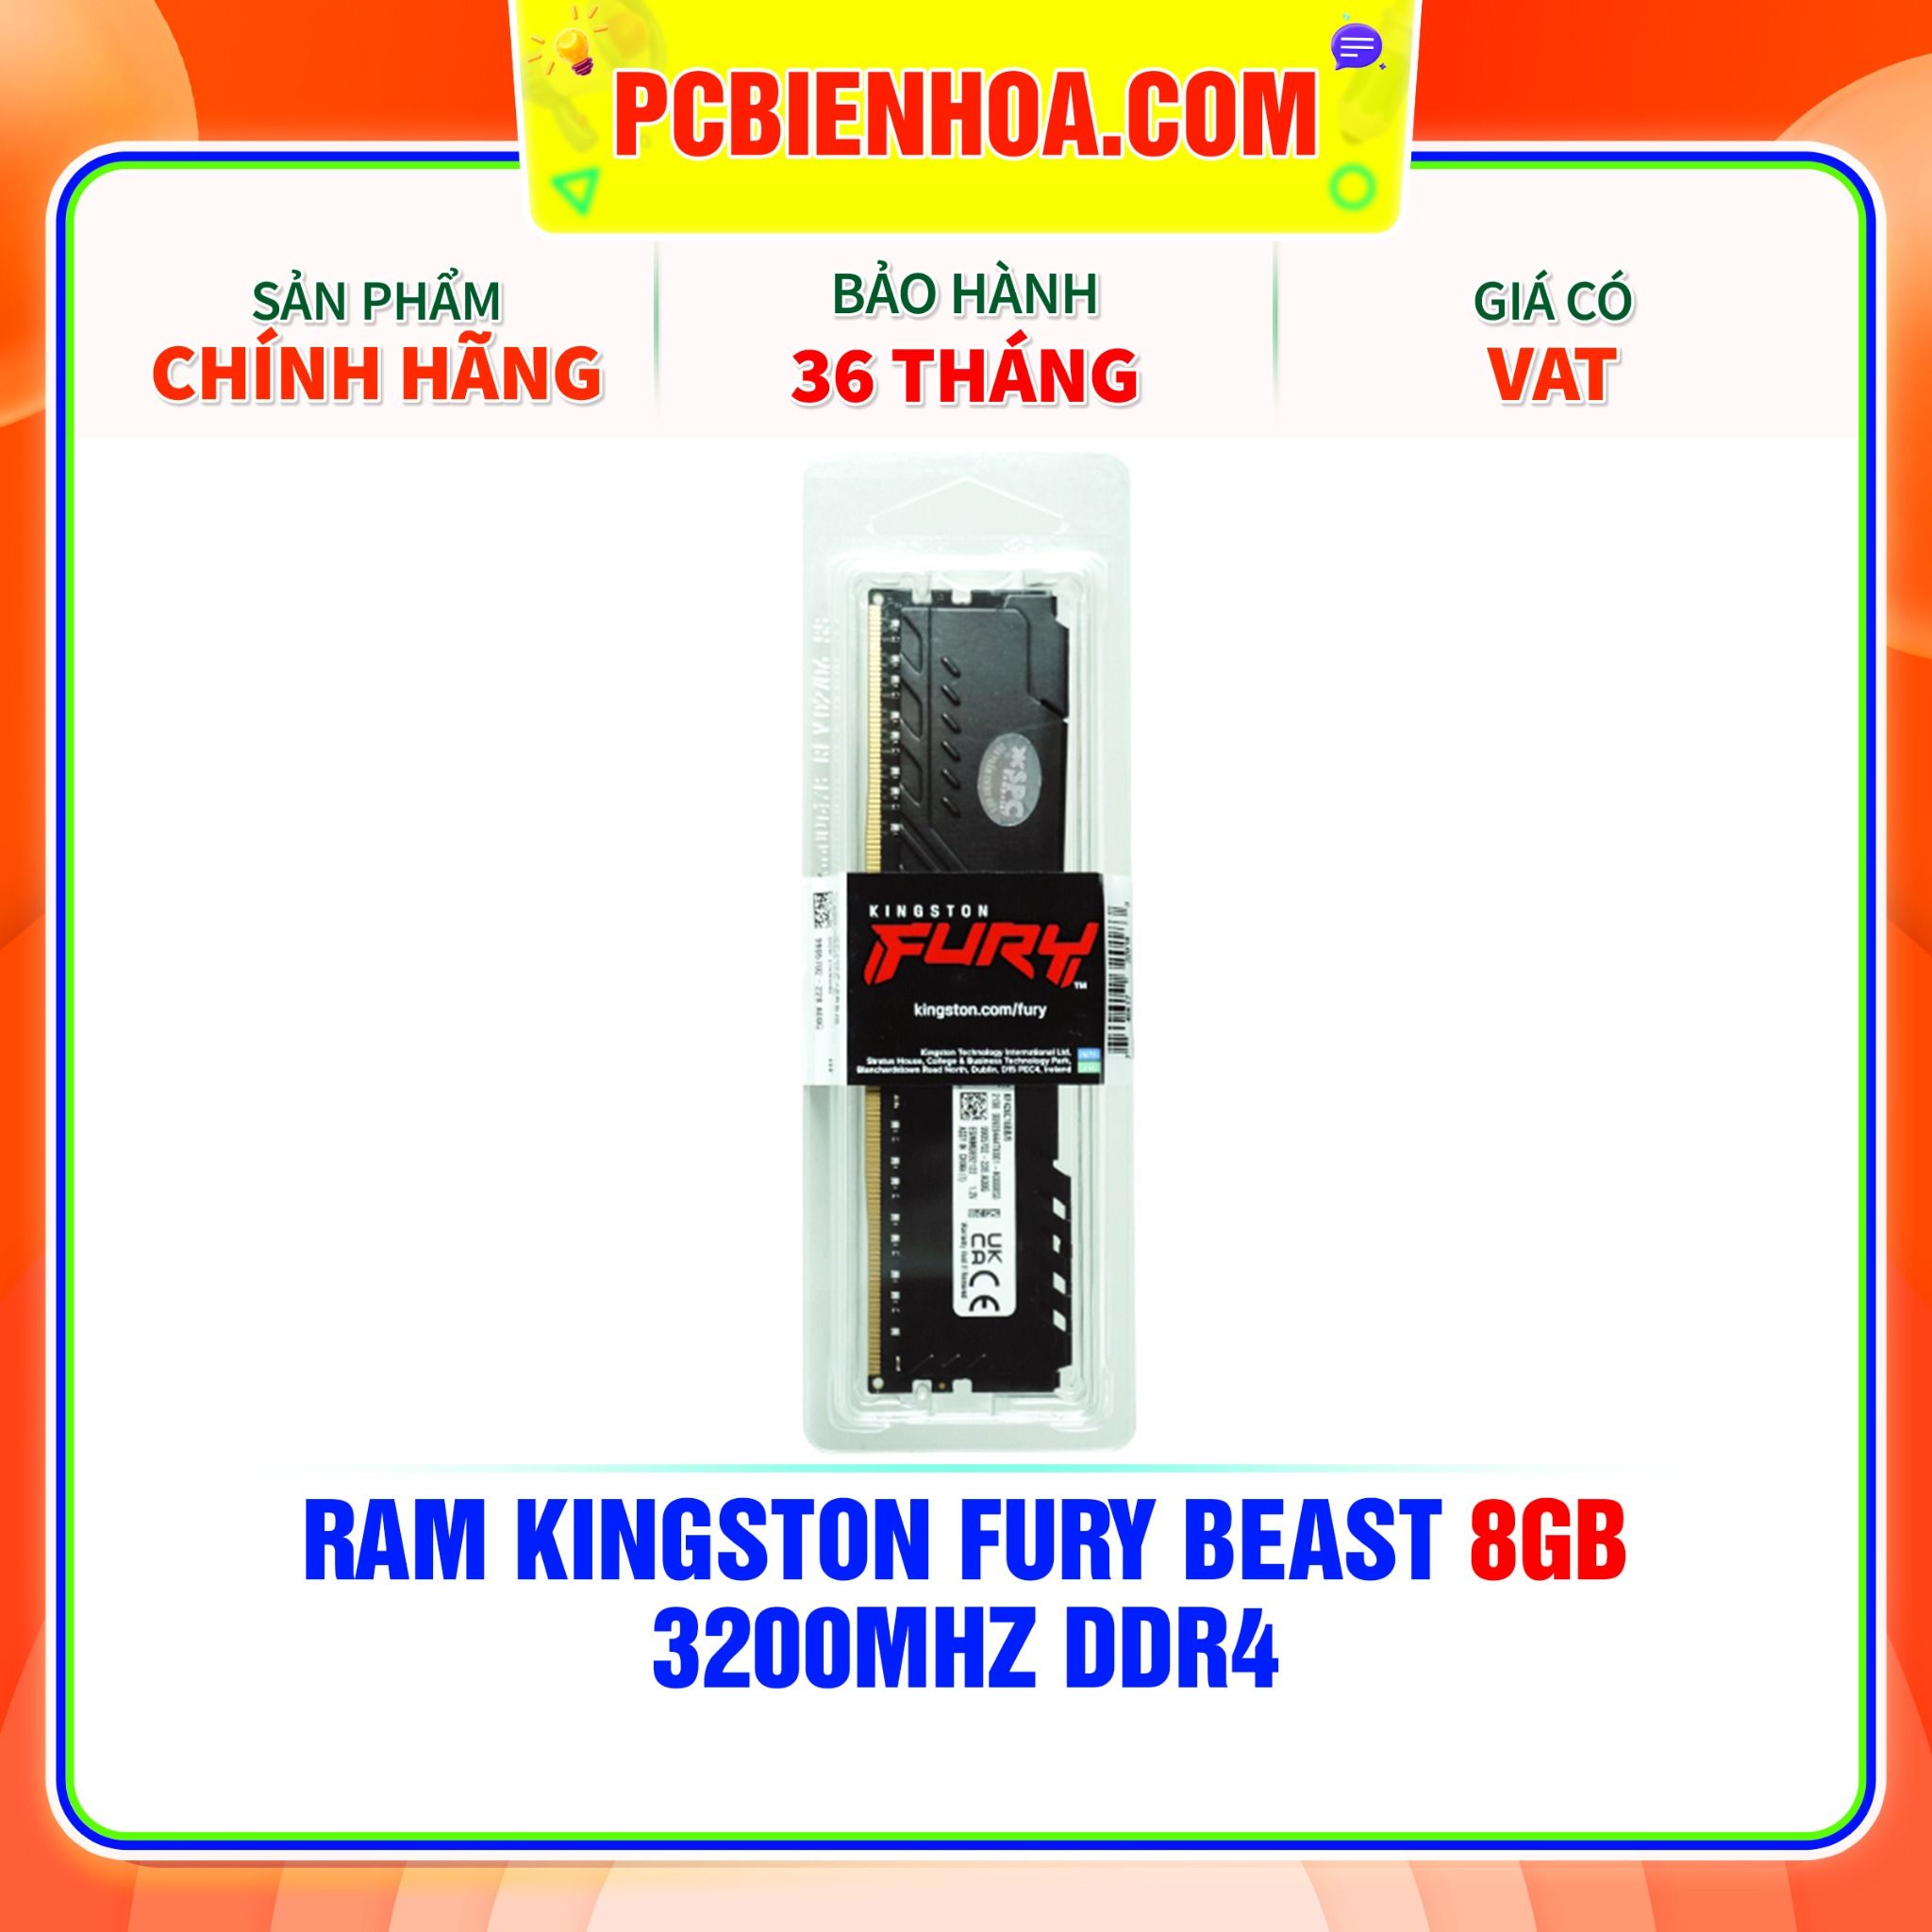  RAM KINGSTON FURY BEAST 8GB 3200MHz DDR4 